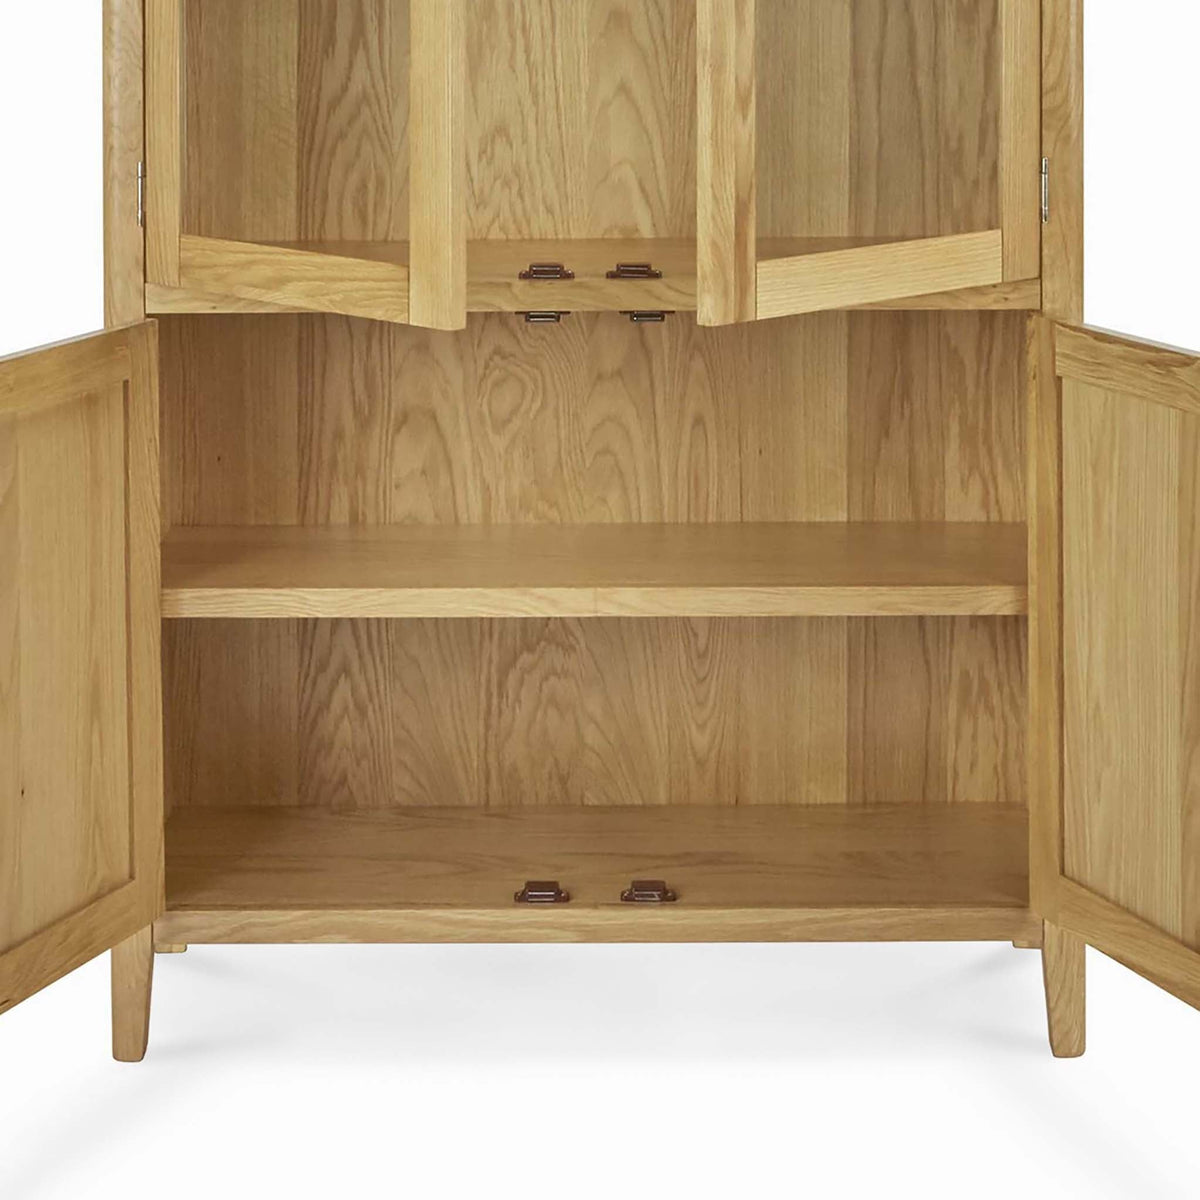 Alba Oak Display Cabinet - Close up of bottom storage cupboard with internal shelf